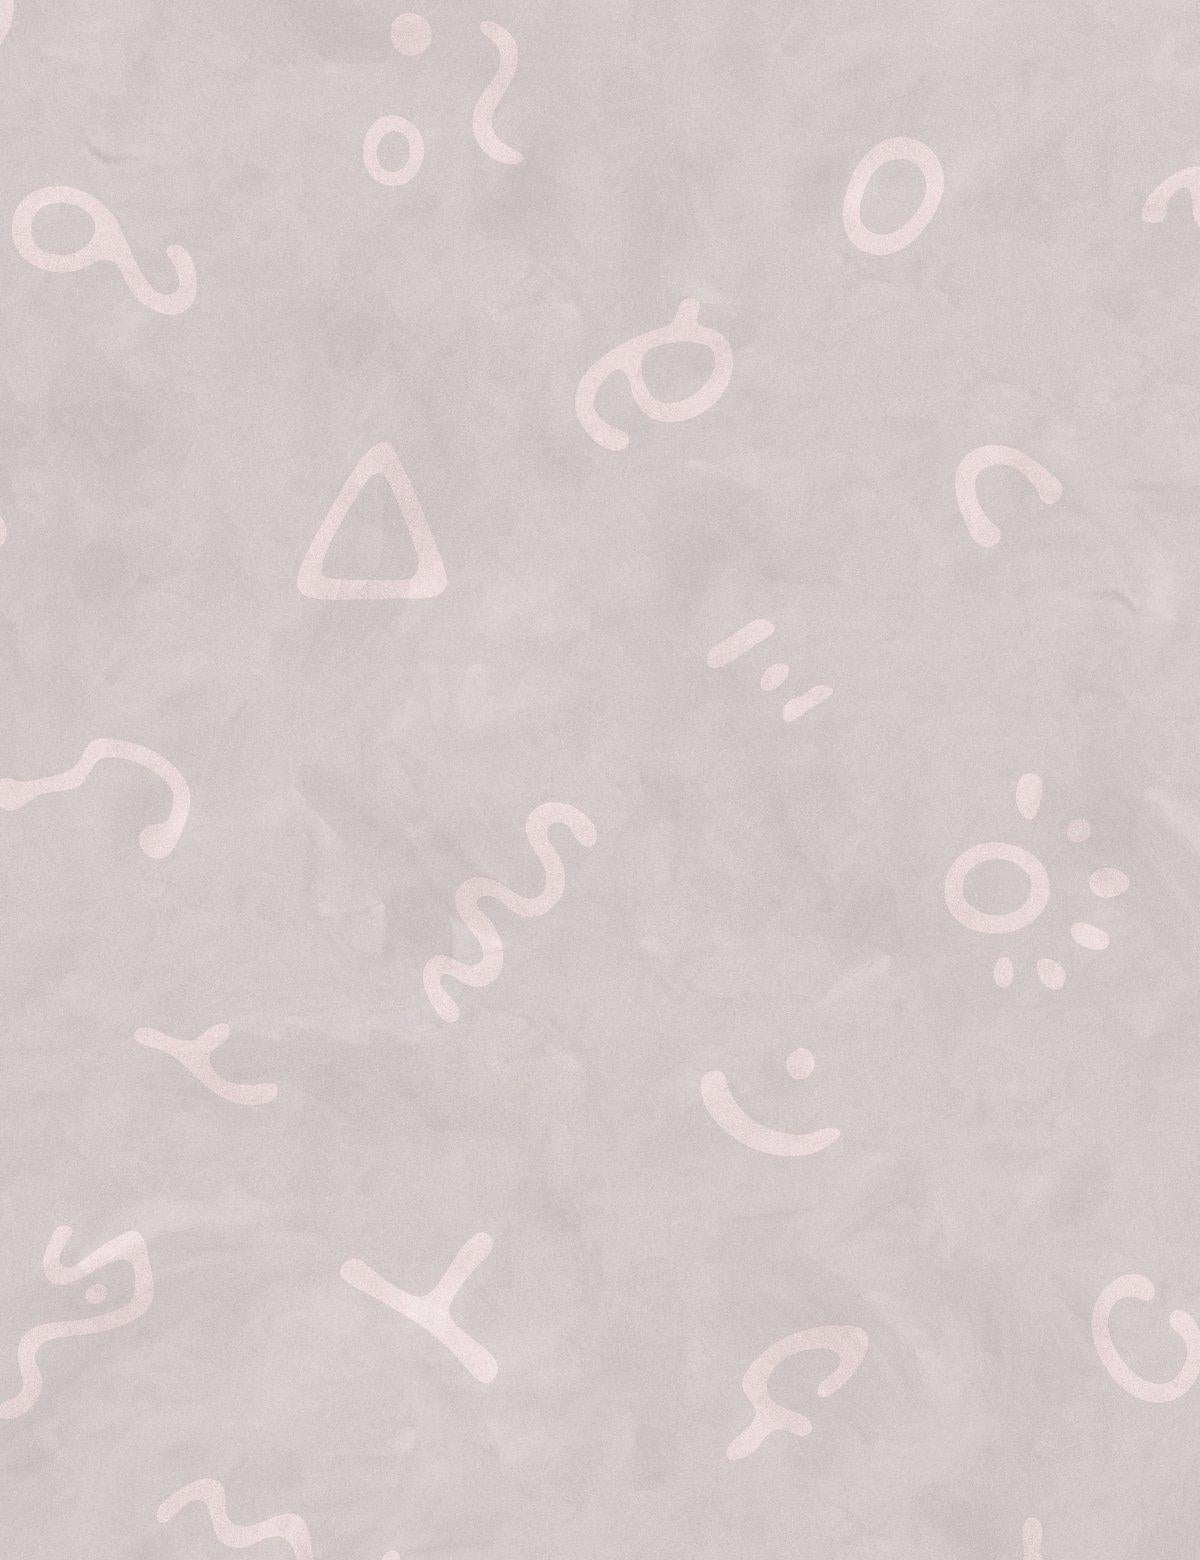 Bohemian Secret Language Designer Wallpaper in Moonbeam 'Pale Pink and Light Grey' For Sale